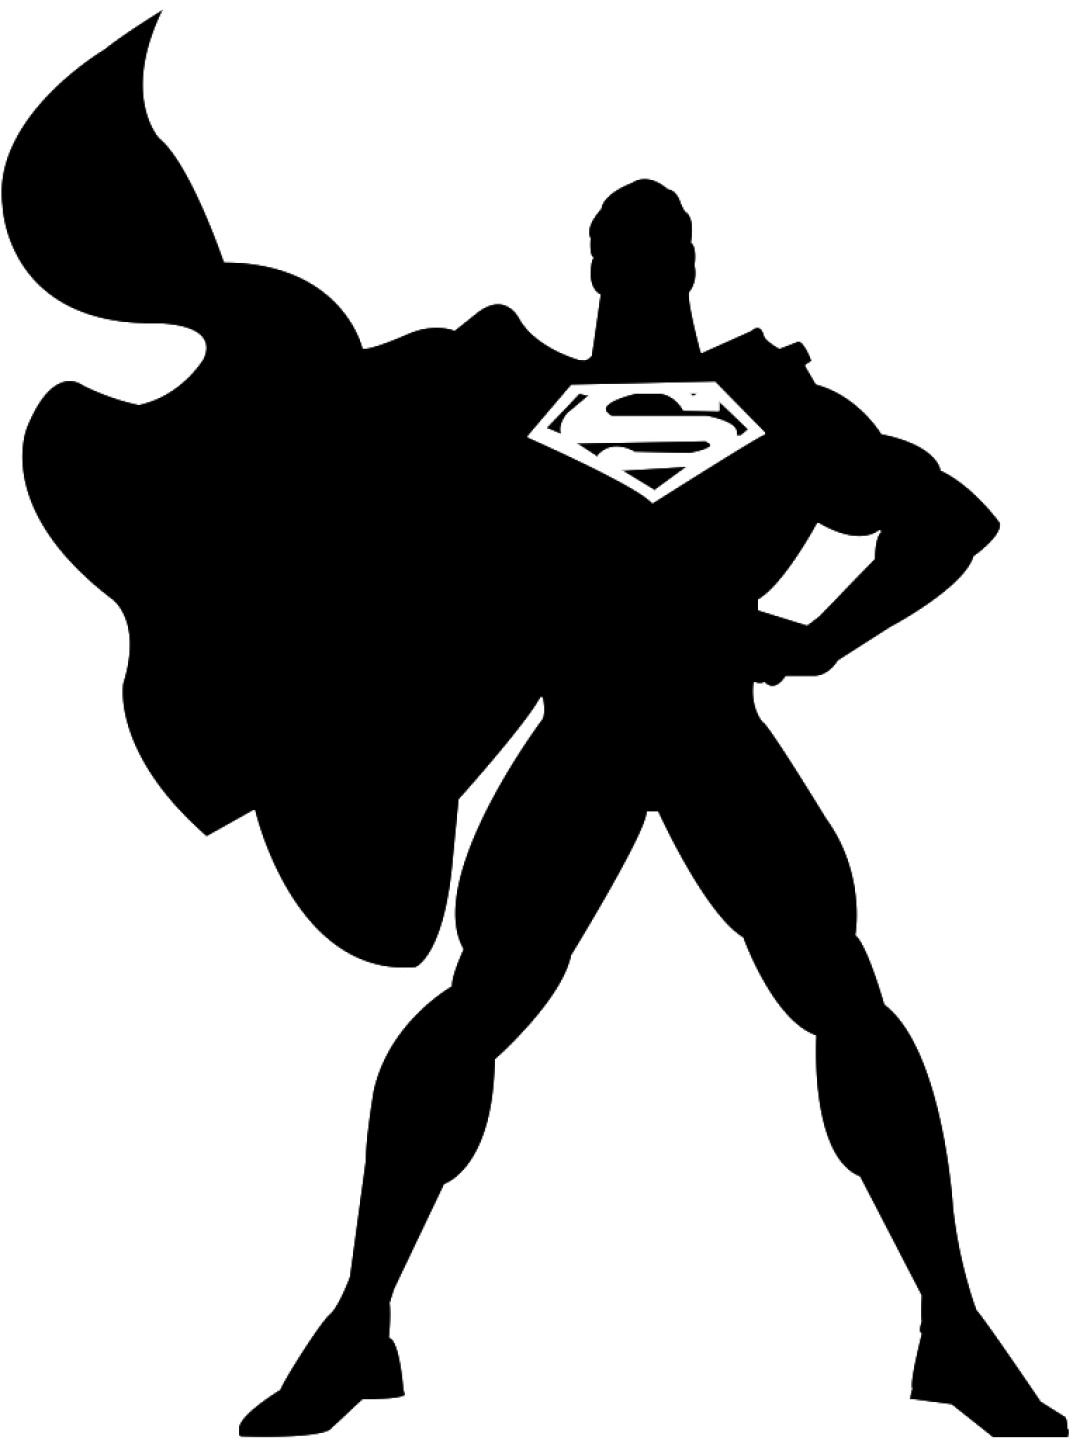 Superman Silhouette Svg. Superman silhouette, Batman silhouette, Superhero silhouette